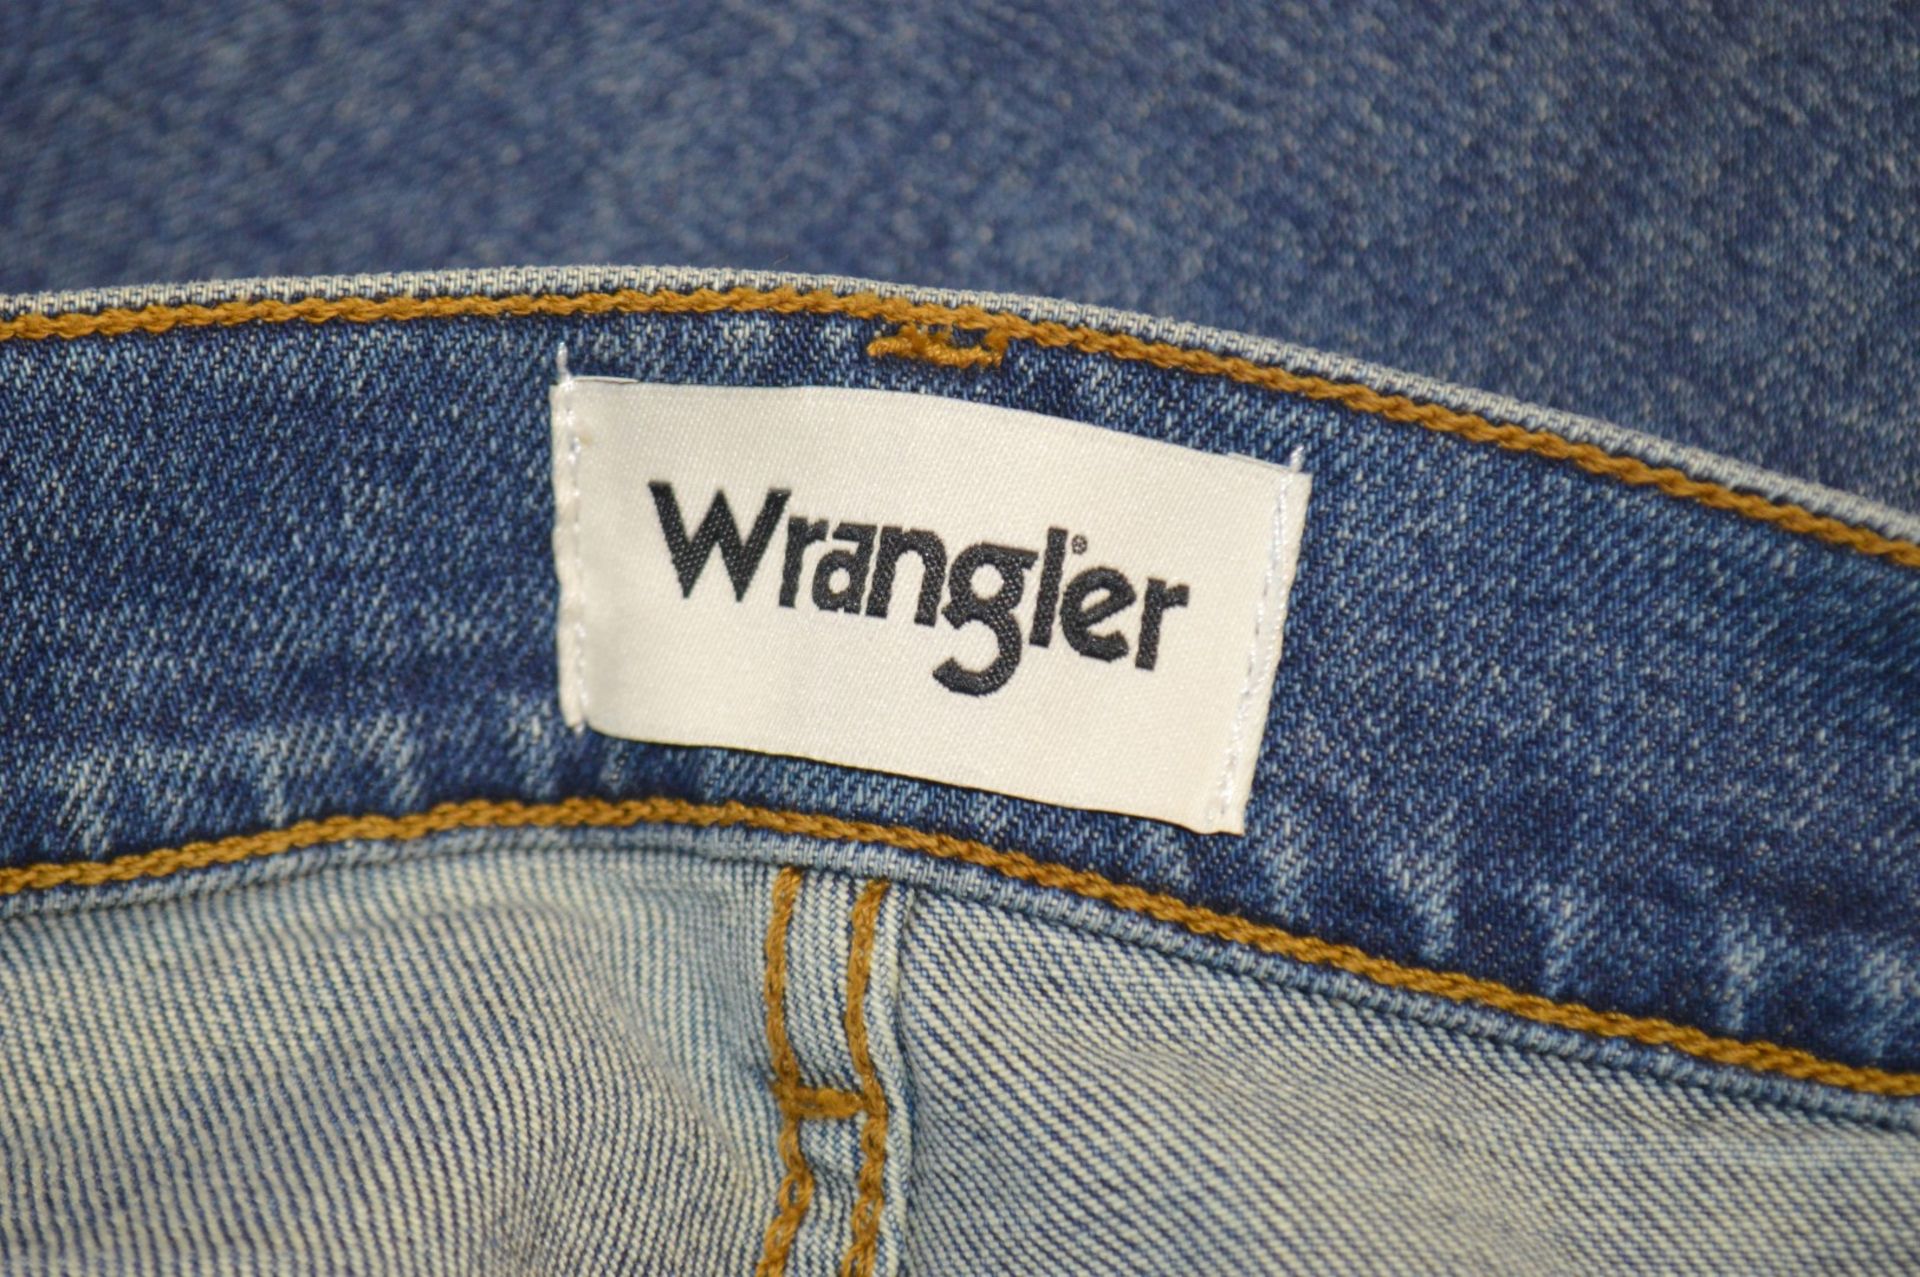 1 x Pair Of Men's Genuine Wrangler BRYSON Skinny Jeans In Blue - Size: UK 30/32 - Preowned, Like - Image 2 of 10